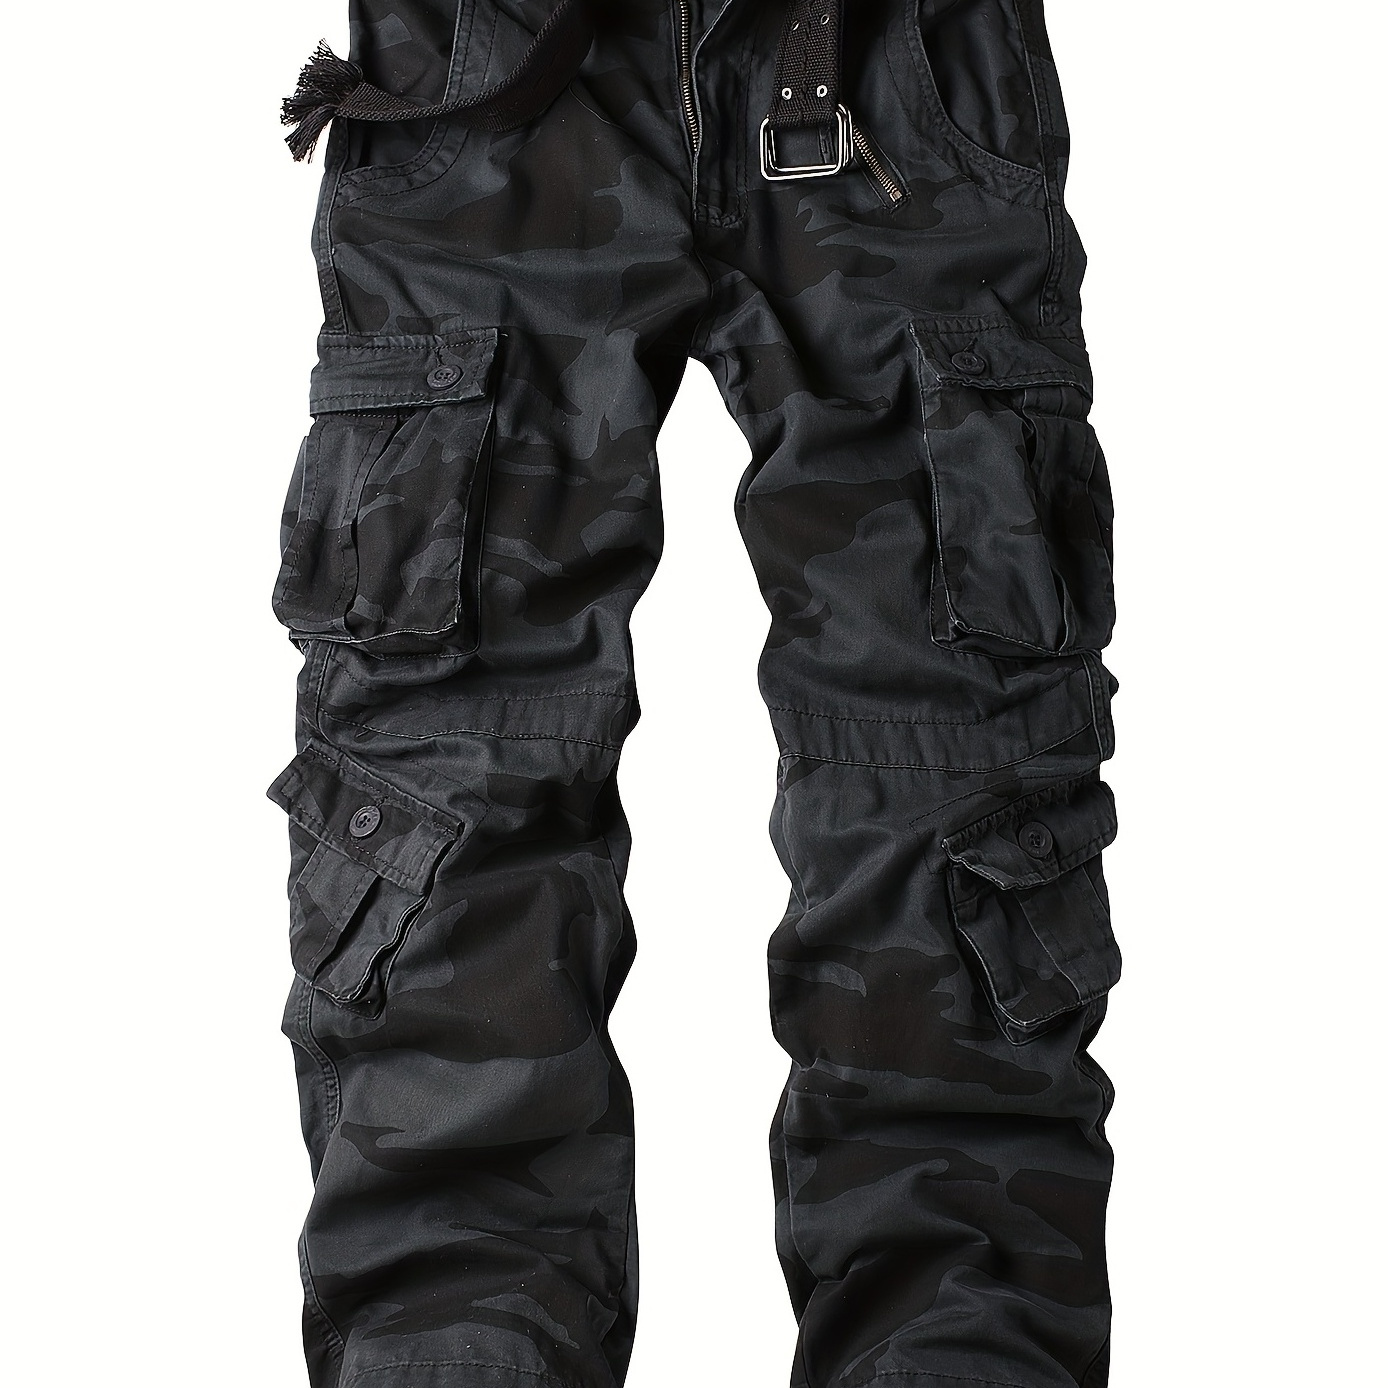 

Aknavy Men's Hiking Pants, Outdoor Ripstop Wild Cargo Pants, Multi-pocket Army Camo Pants, Lightweight Casual Pants